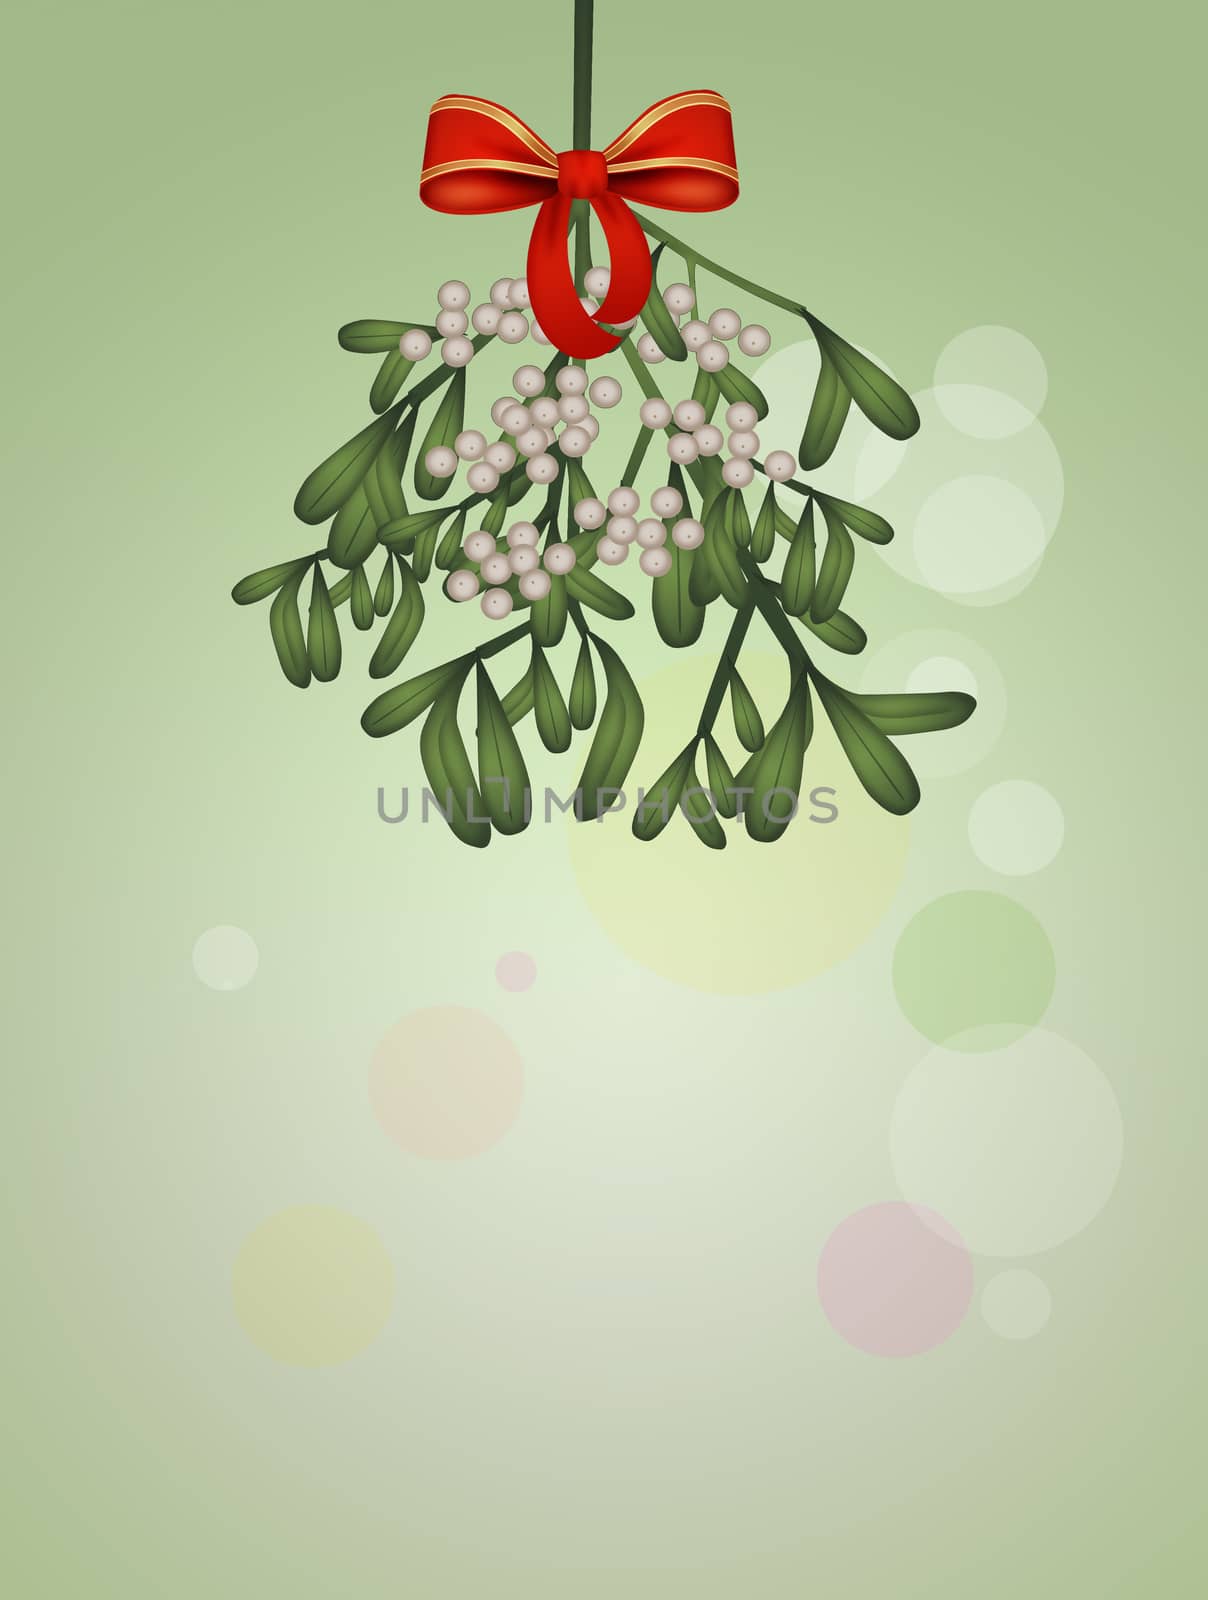 illustration of mistletoe by adrenalina